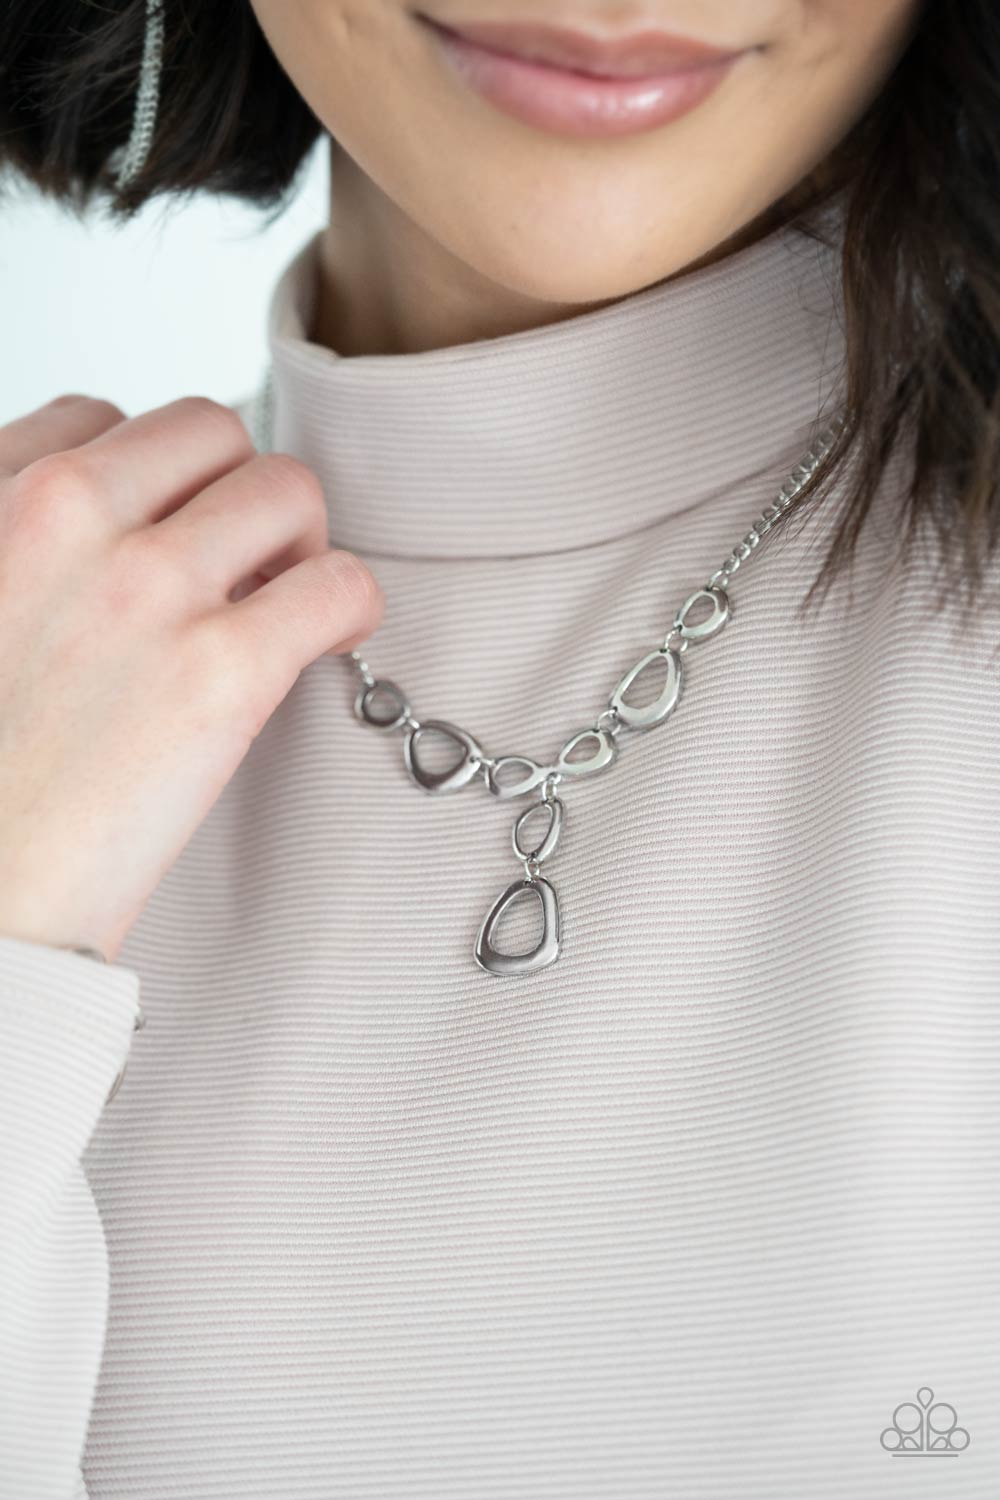 Paparazzi Accessories: So Mod Necklace & All That Mod Bracelet - Silver SET - Jewels N Thingz Boutique